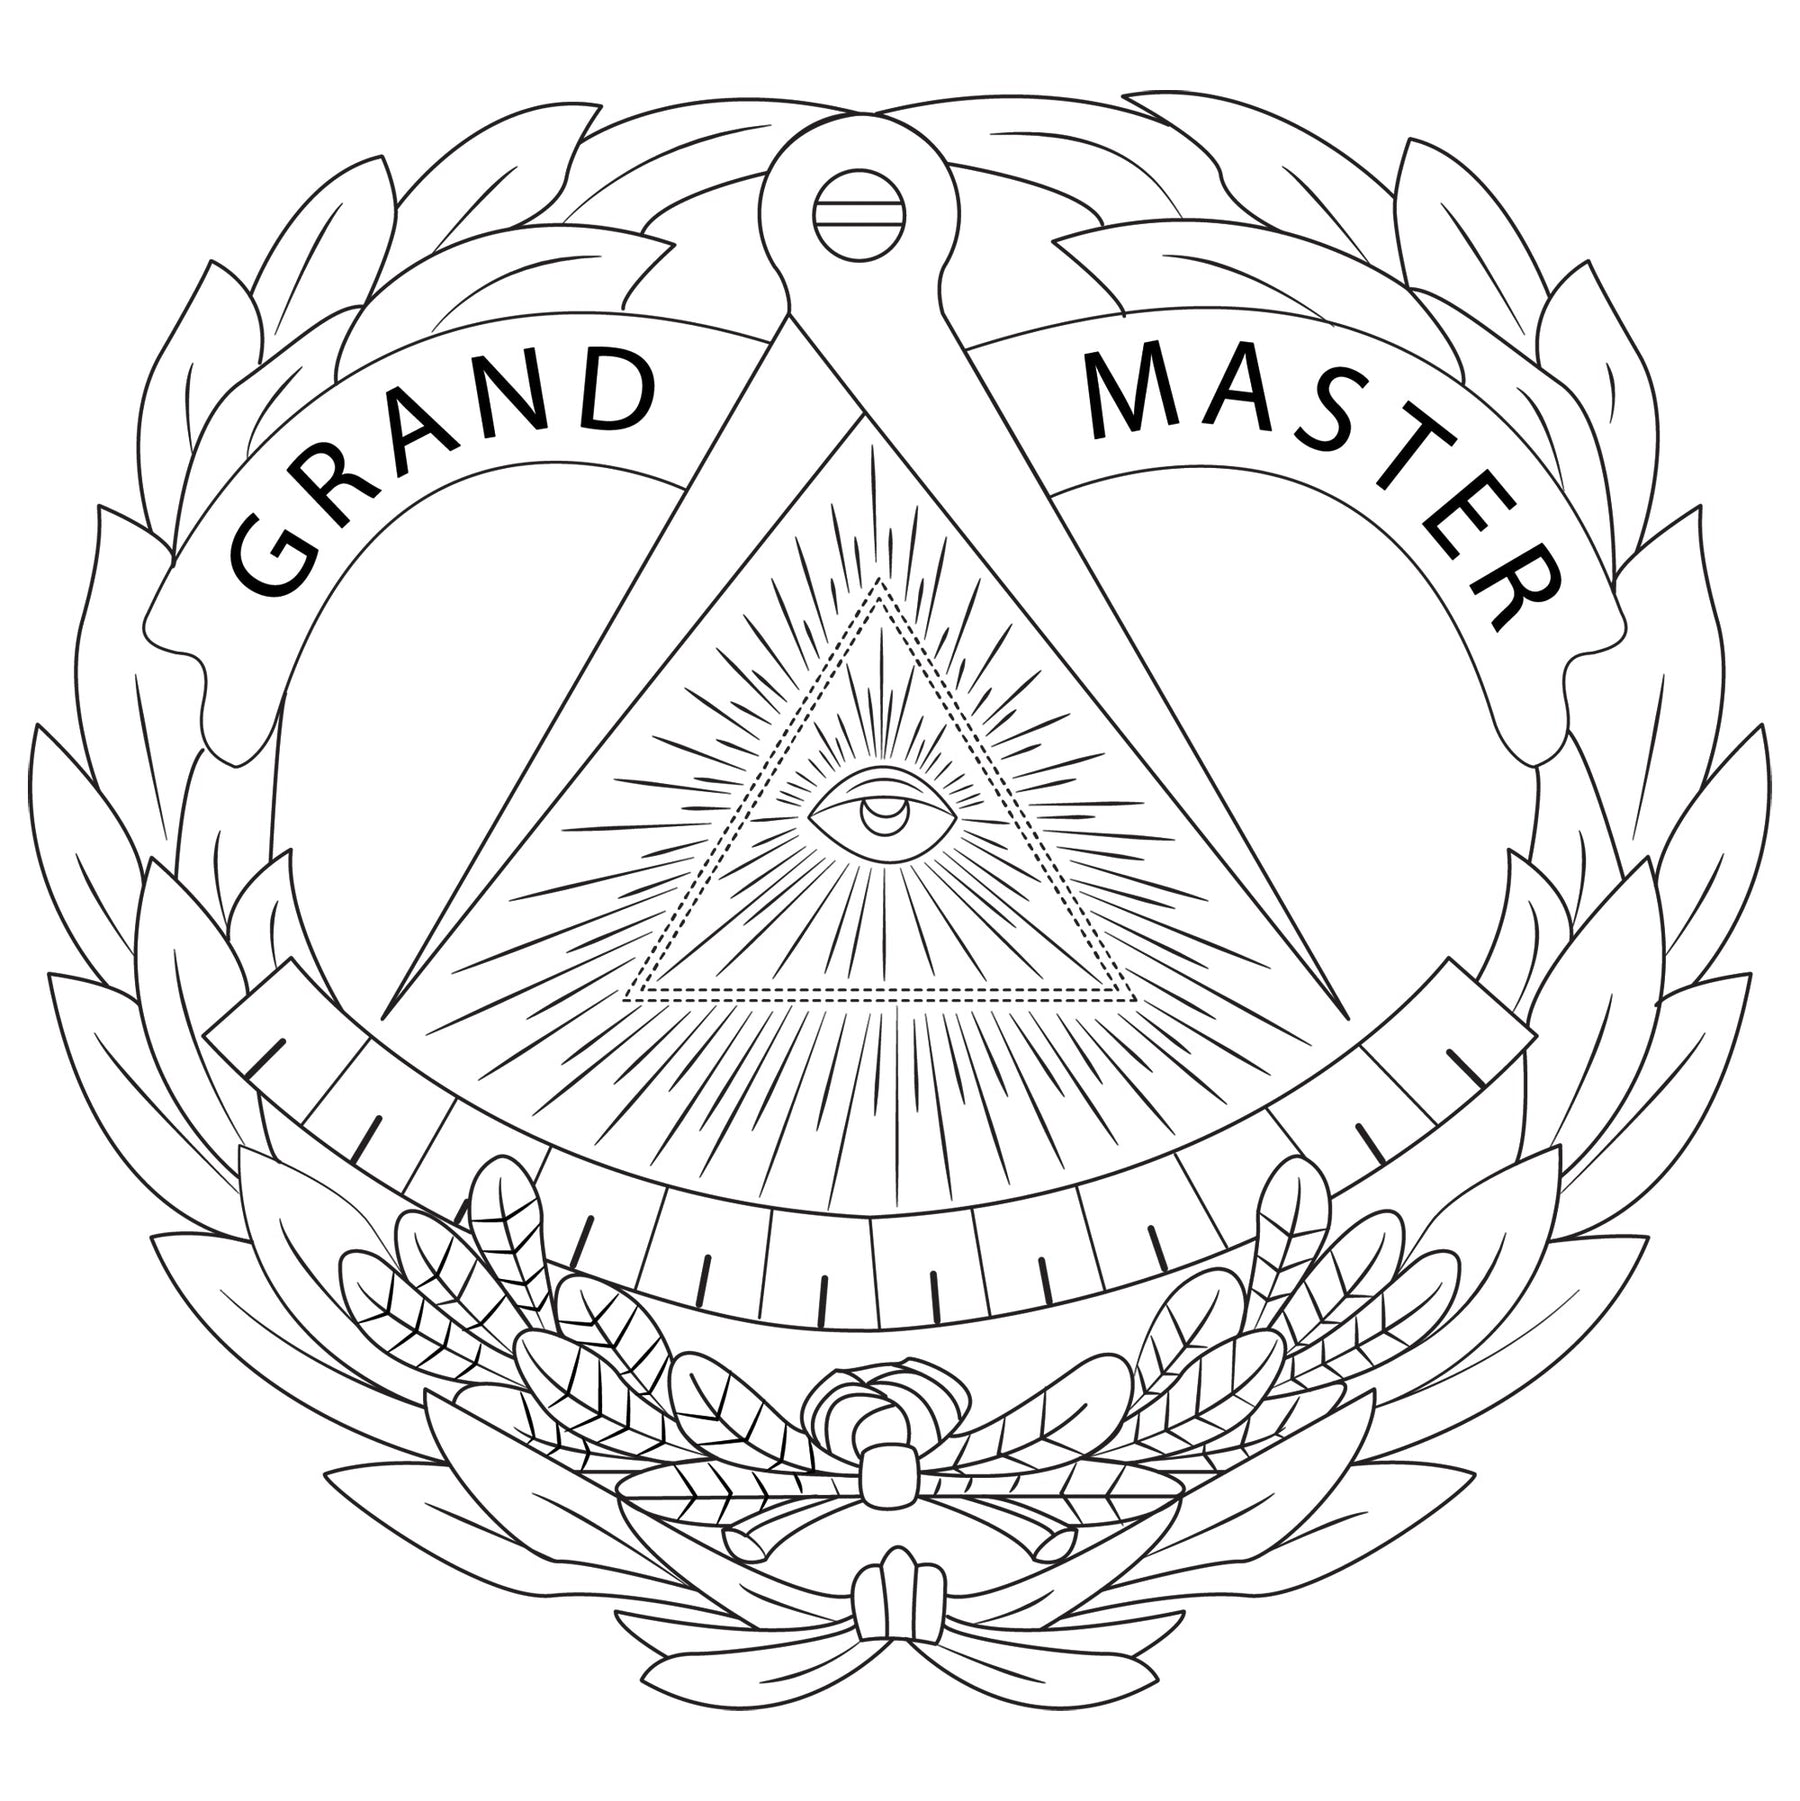 Grand Master Blue Lodge Flask - Leather & Stainless Steel - Bricks Masons